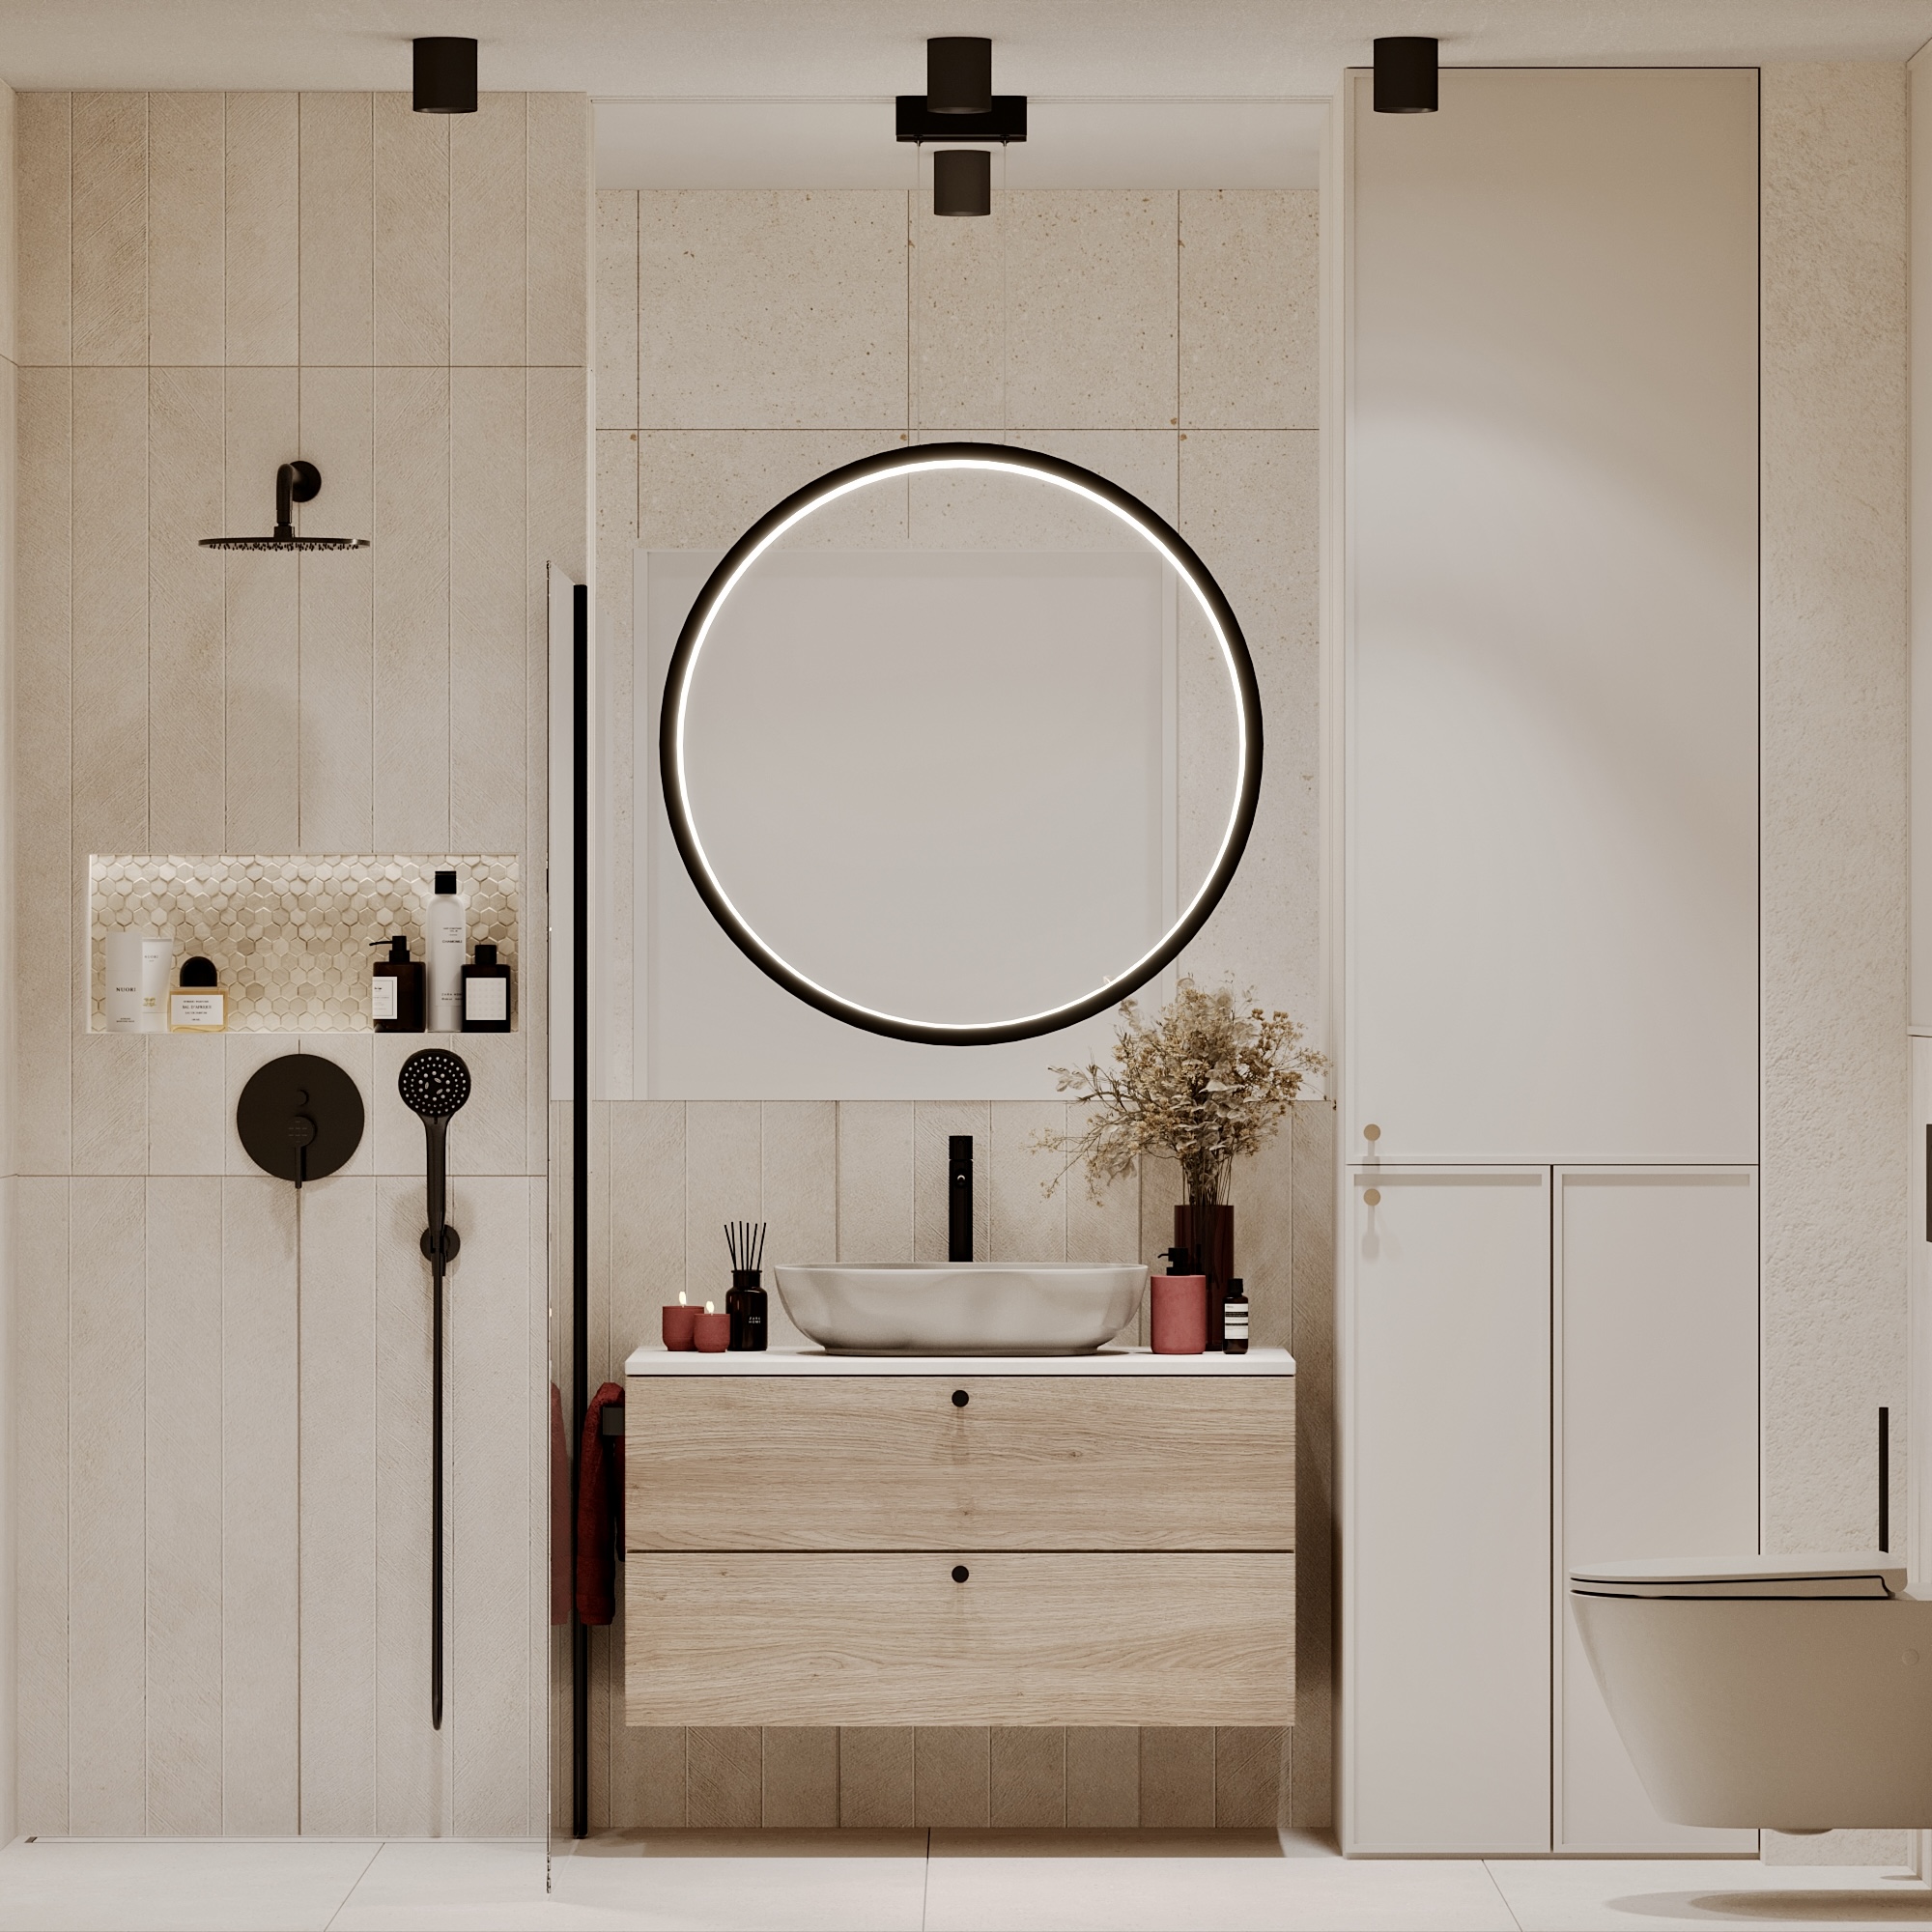 dinana studio visualization of apartment "Soft Touch" bathroom